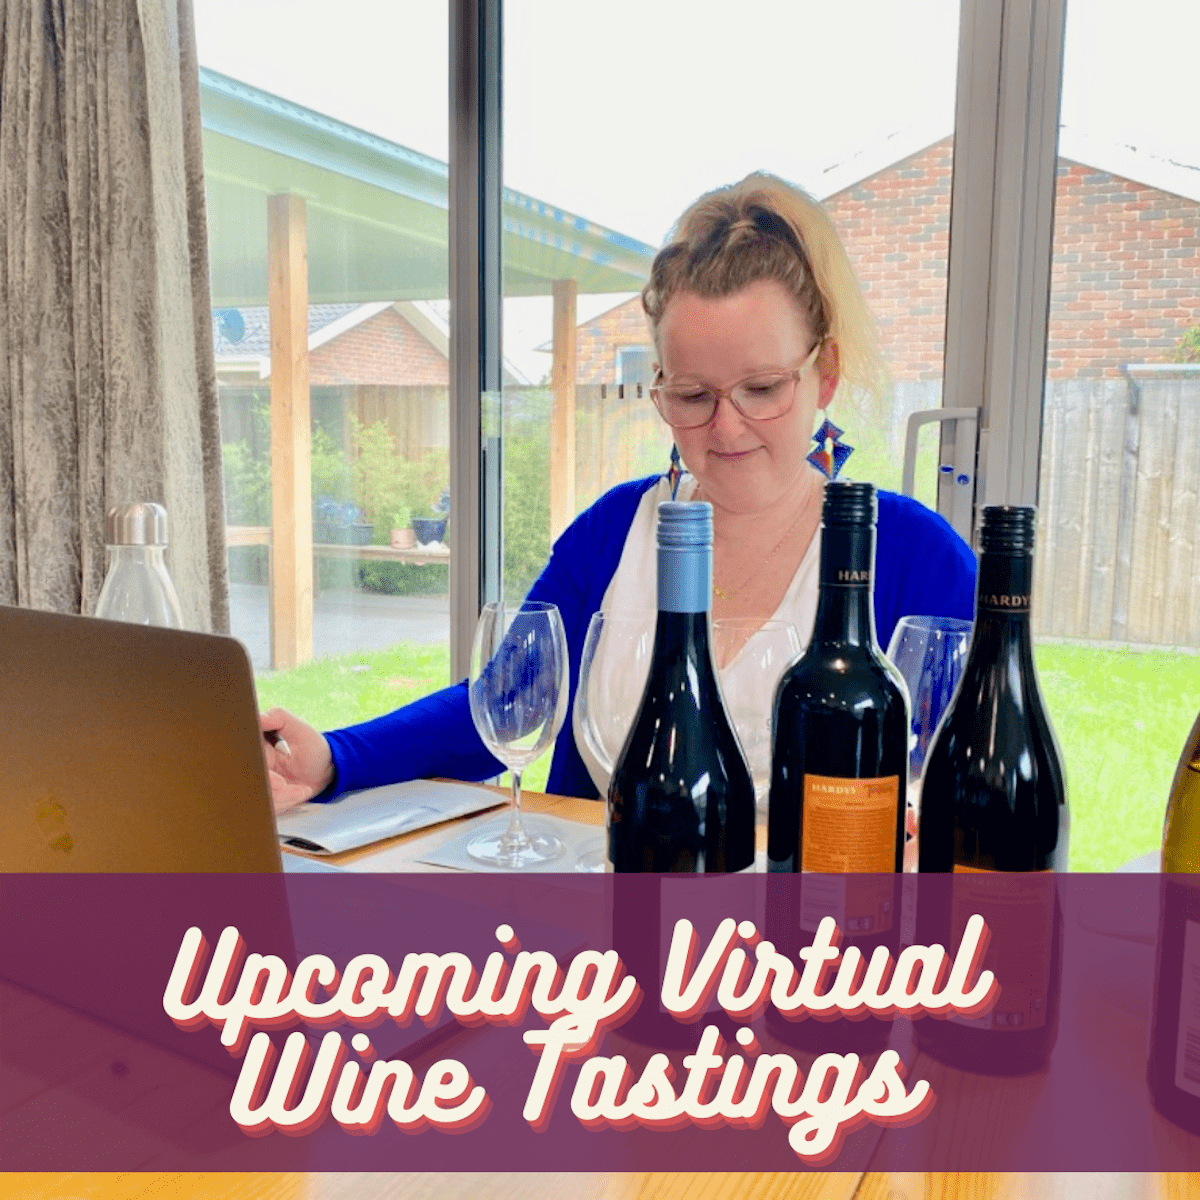 Upcoming Virtual Wine Tastings